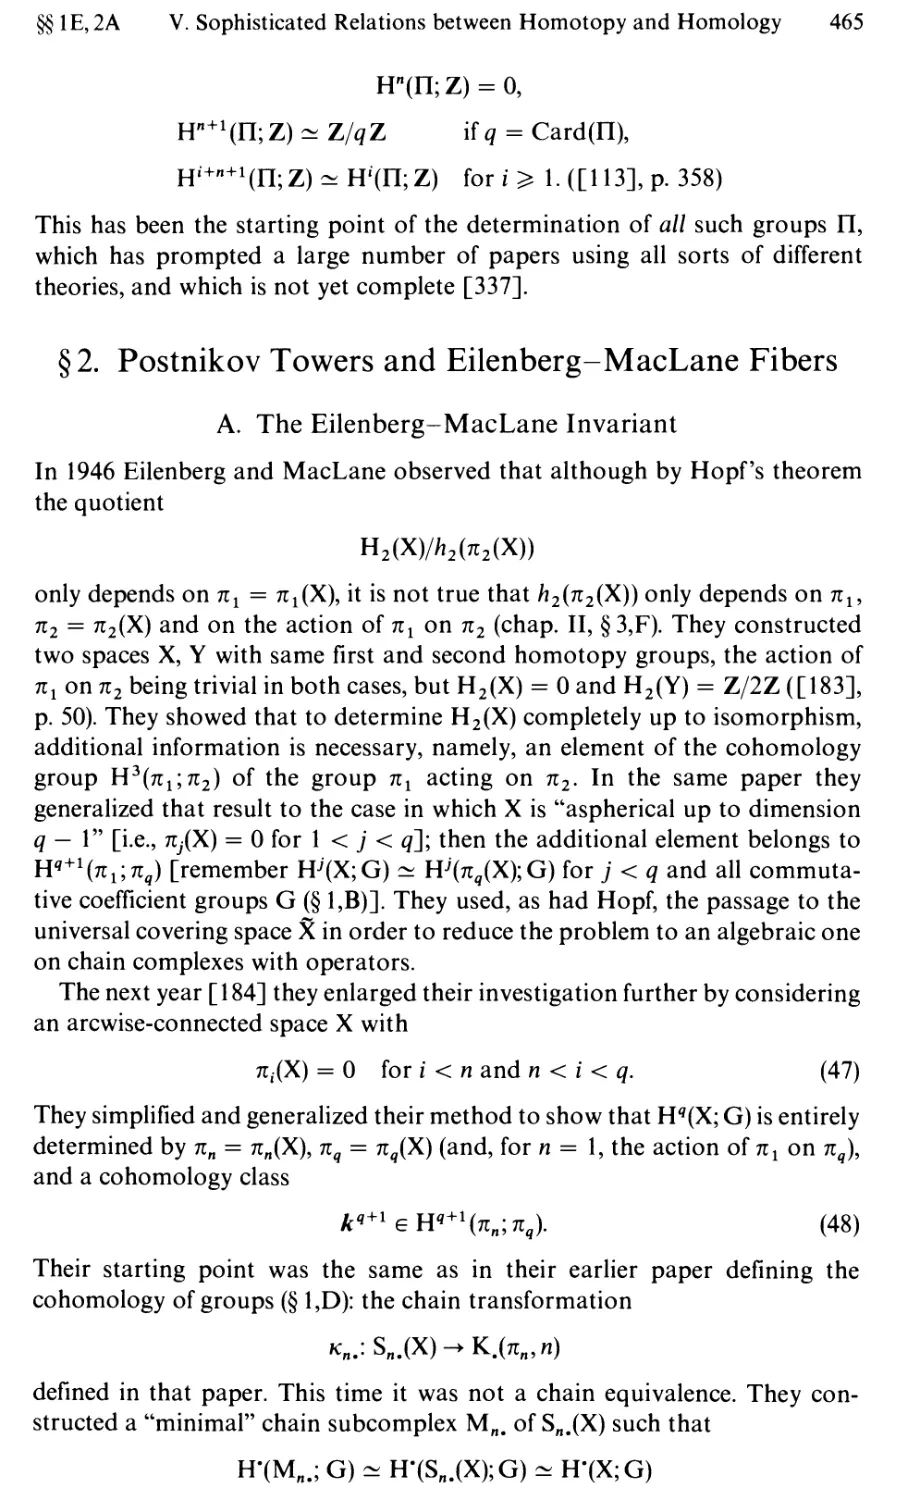 §2. Postnikov Towers and Eilenberg-Mac Lane Fibers